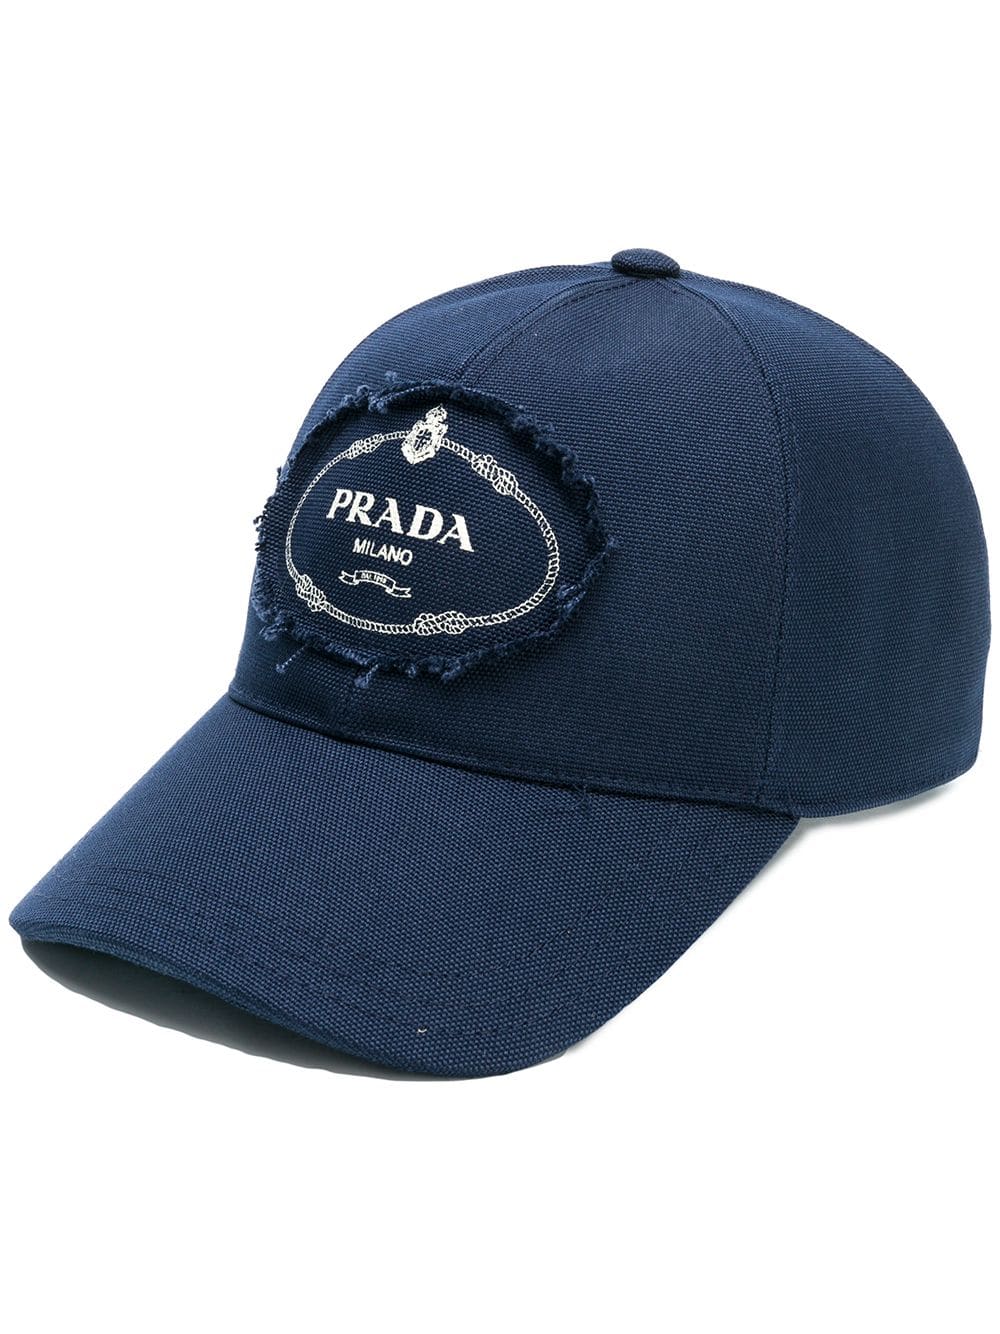 Navy Blue Oval Logo - Prada - Oval Logo Cap - Mens - Navy In Blue | ModeSens